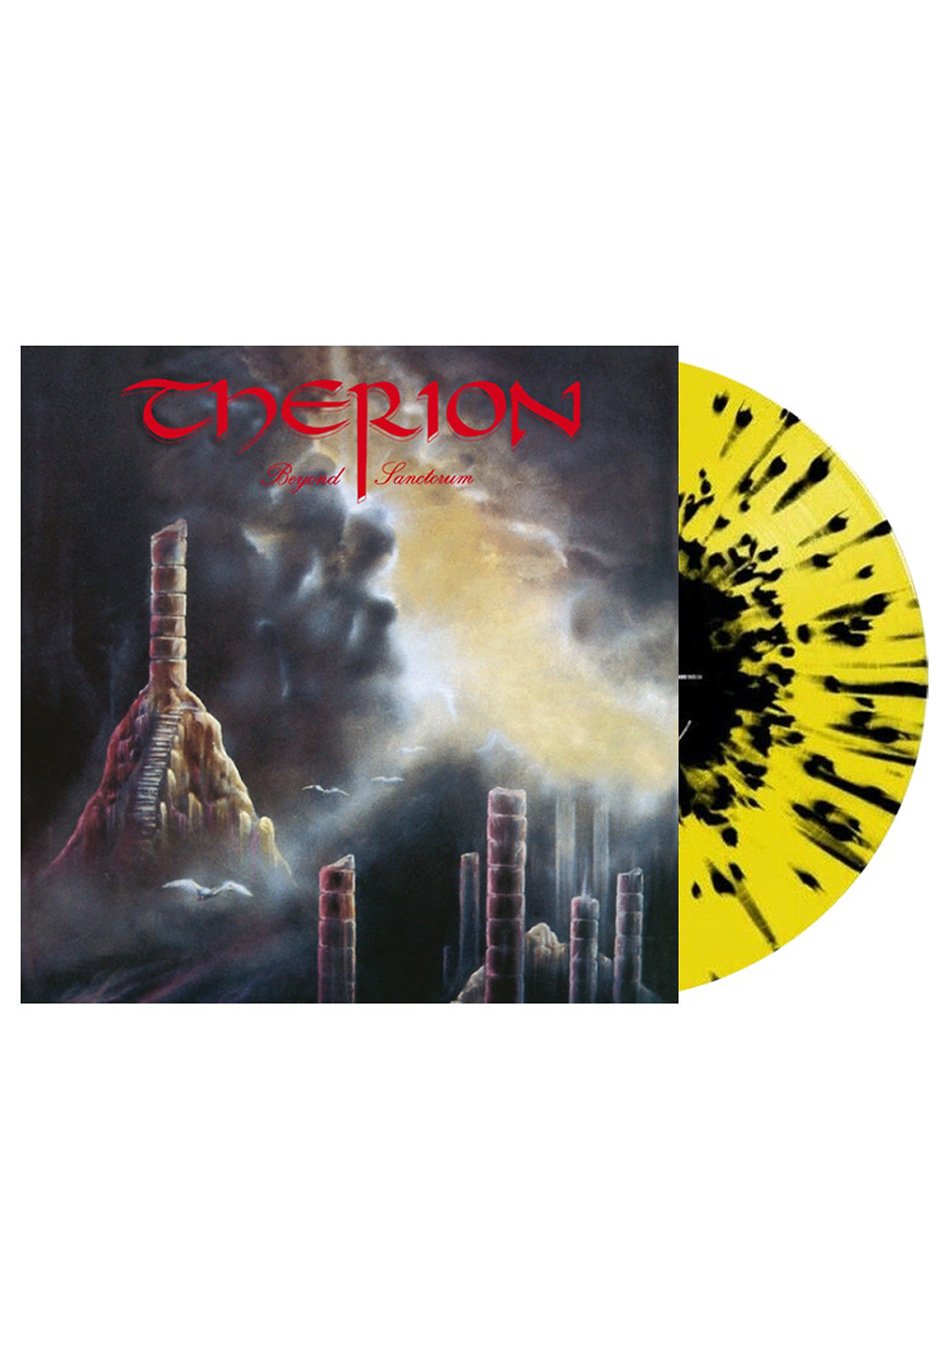 Therion - Beyond Sanctorium Rerelease Yellow/Black - Splattered Vinyl